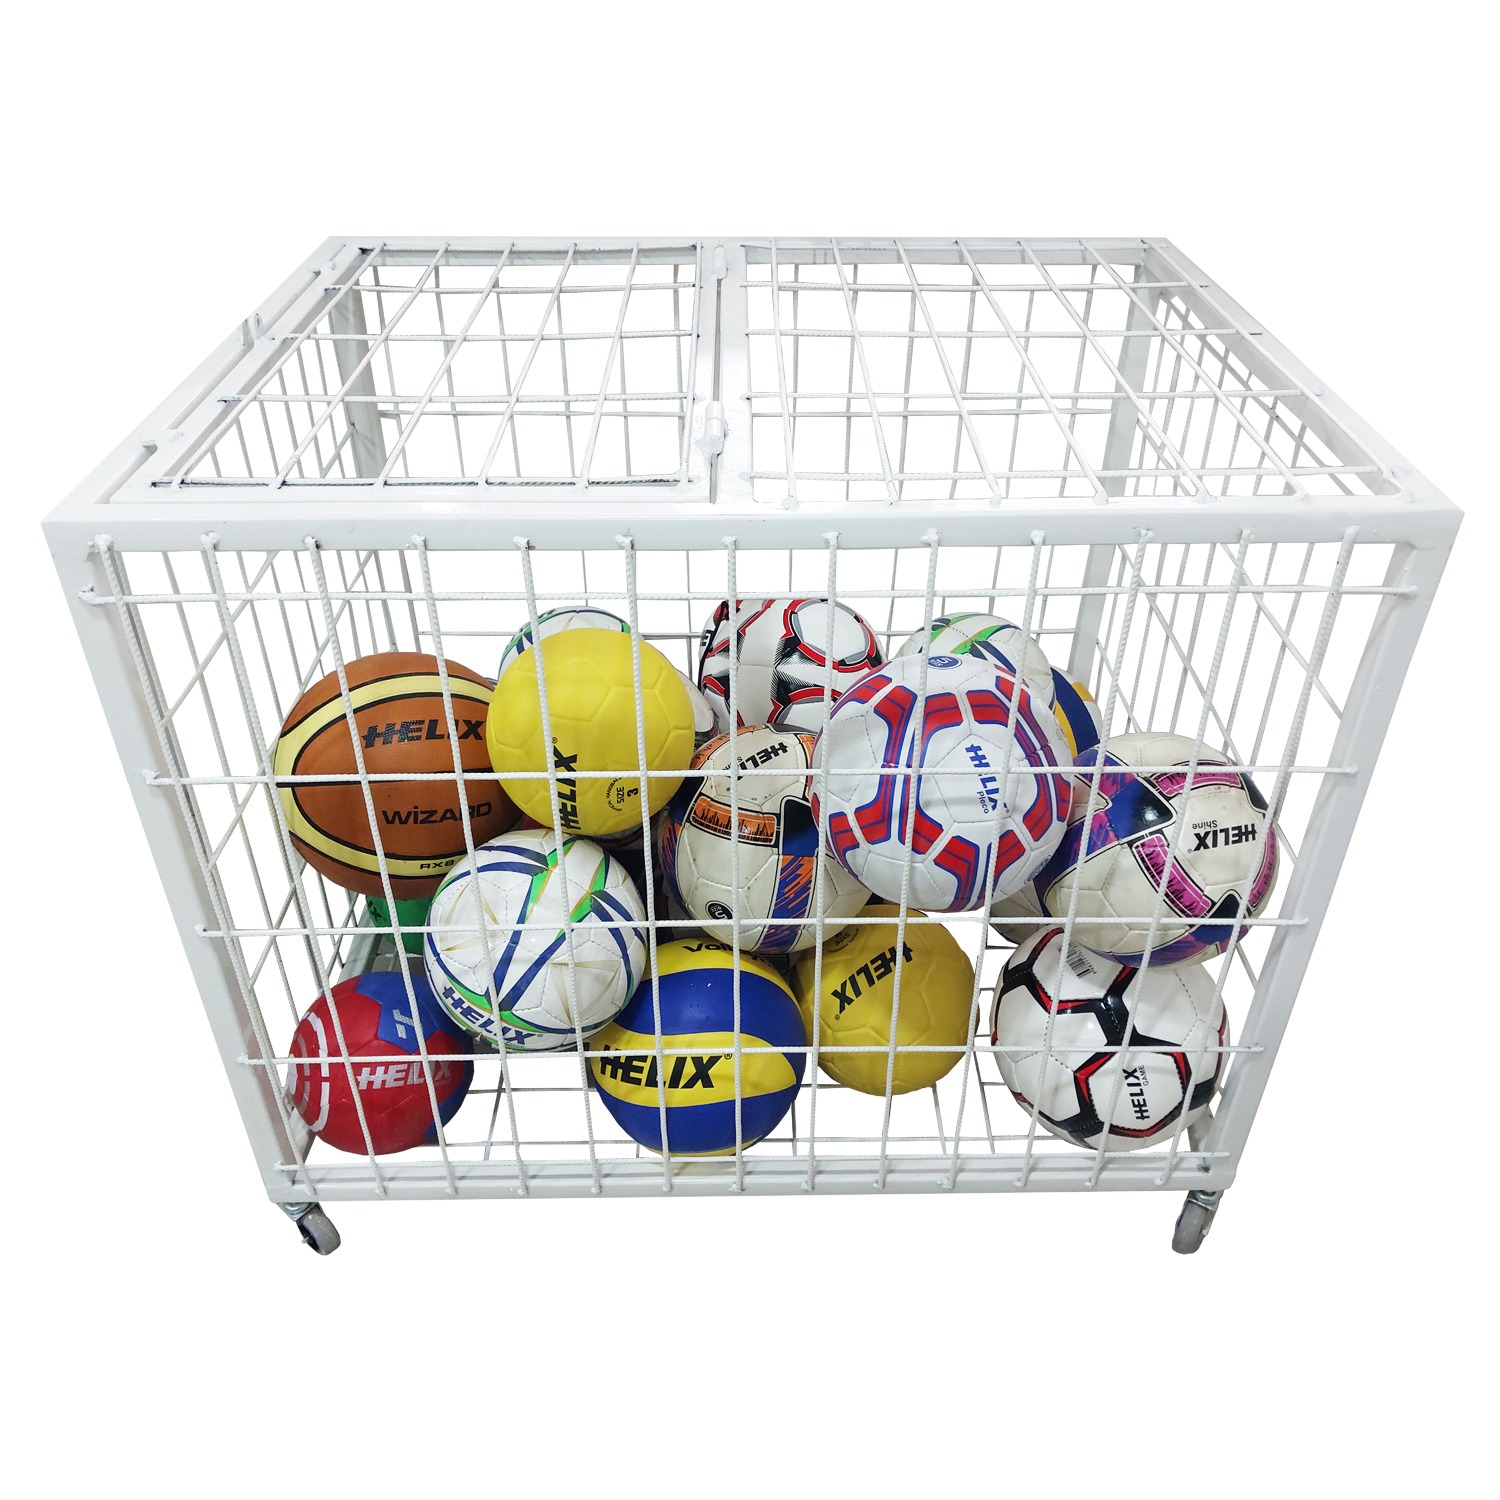 Helix Ball Carrying Basket